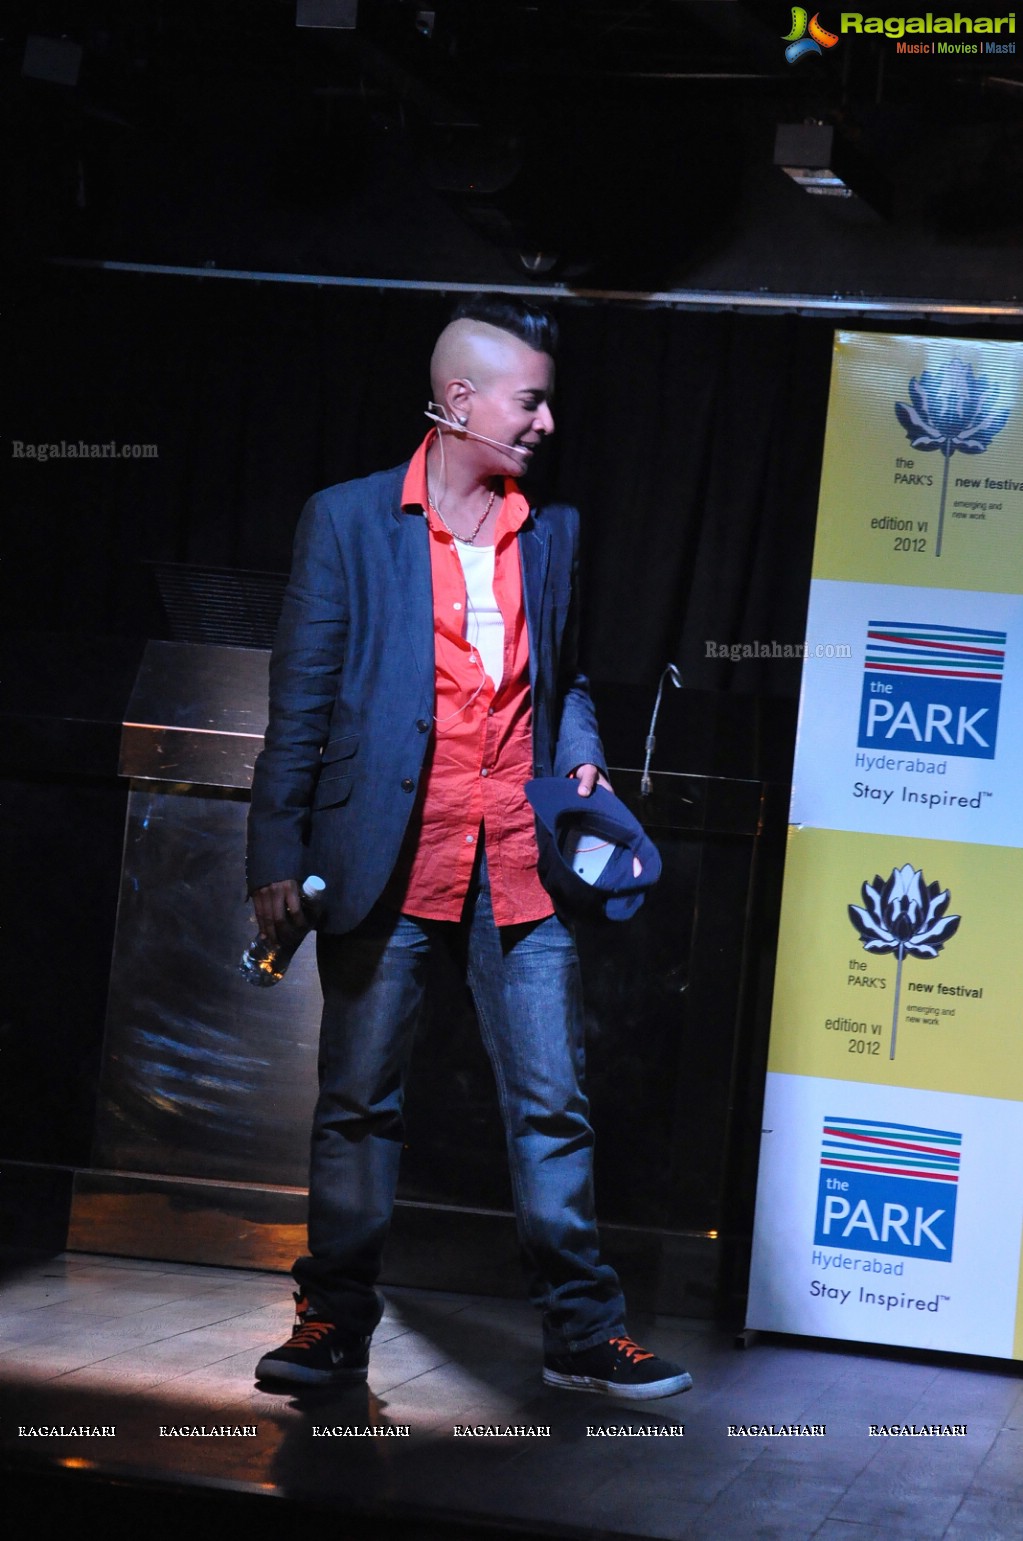 The Park's New Festival 2012 - Comedy Show